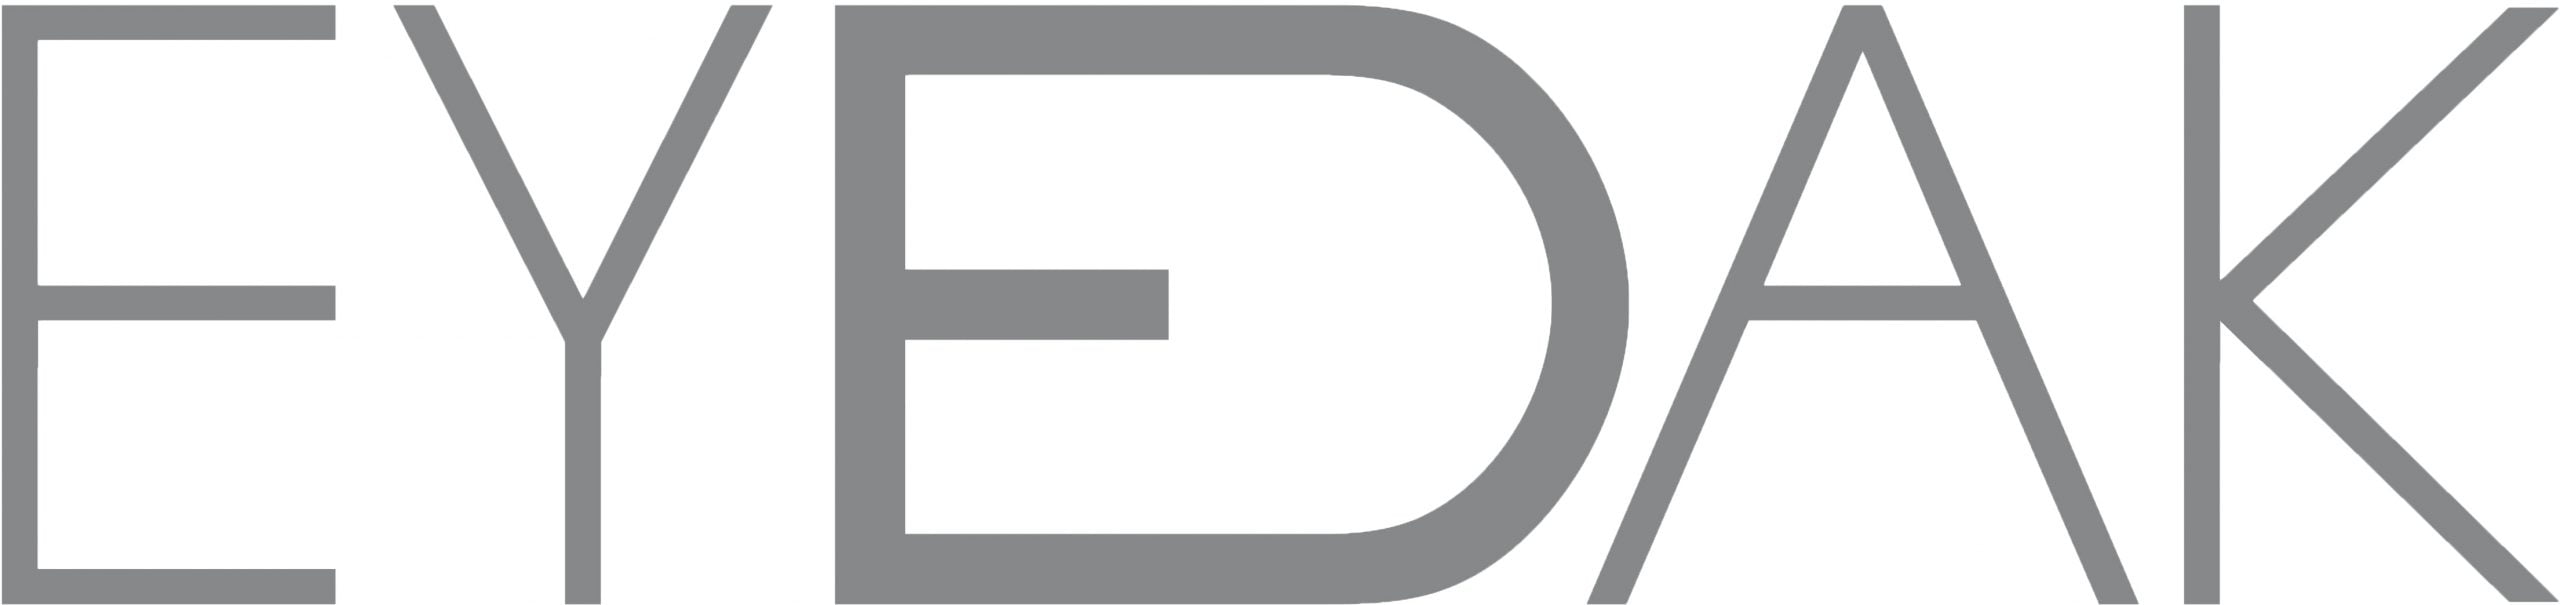 EYEDAK_logo-L